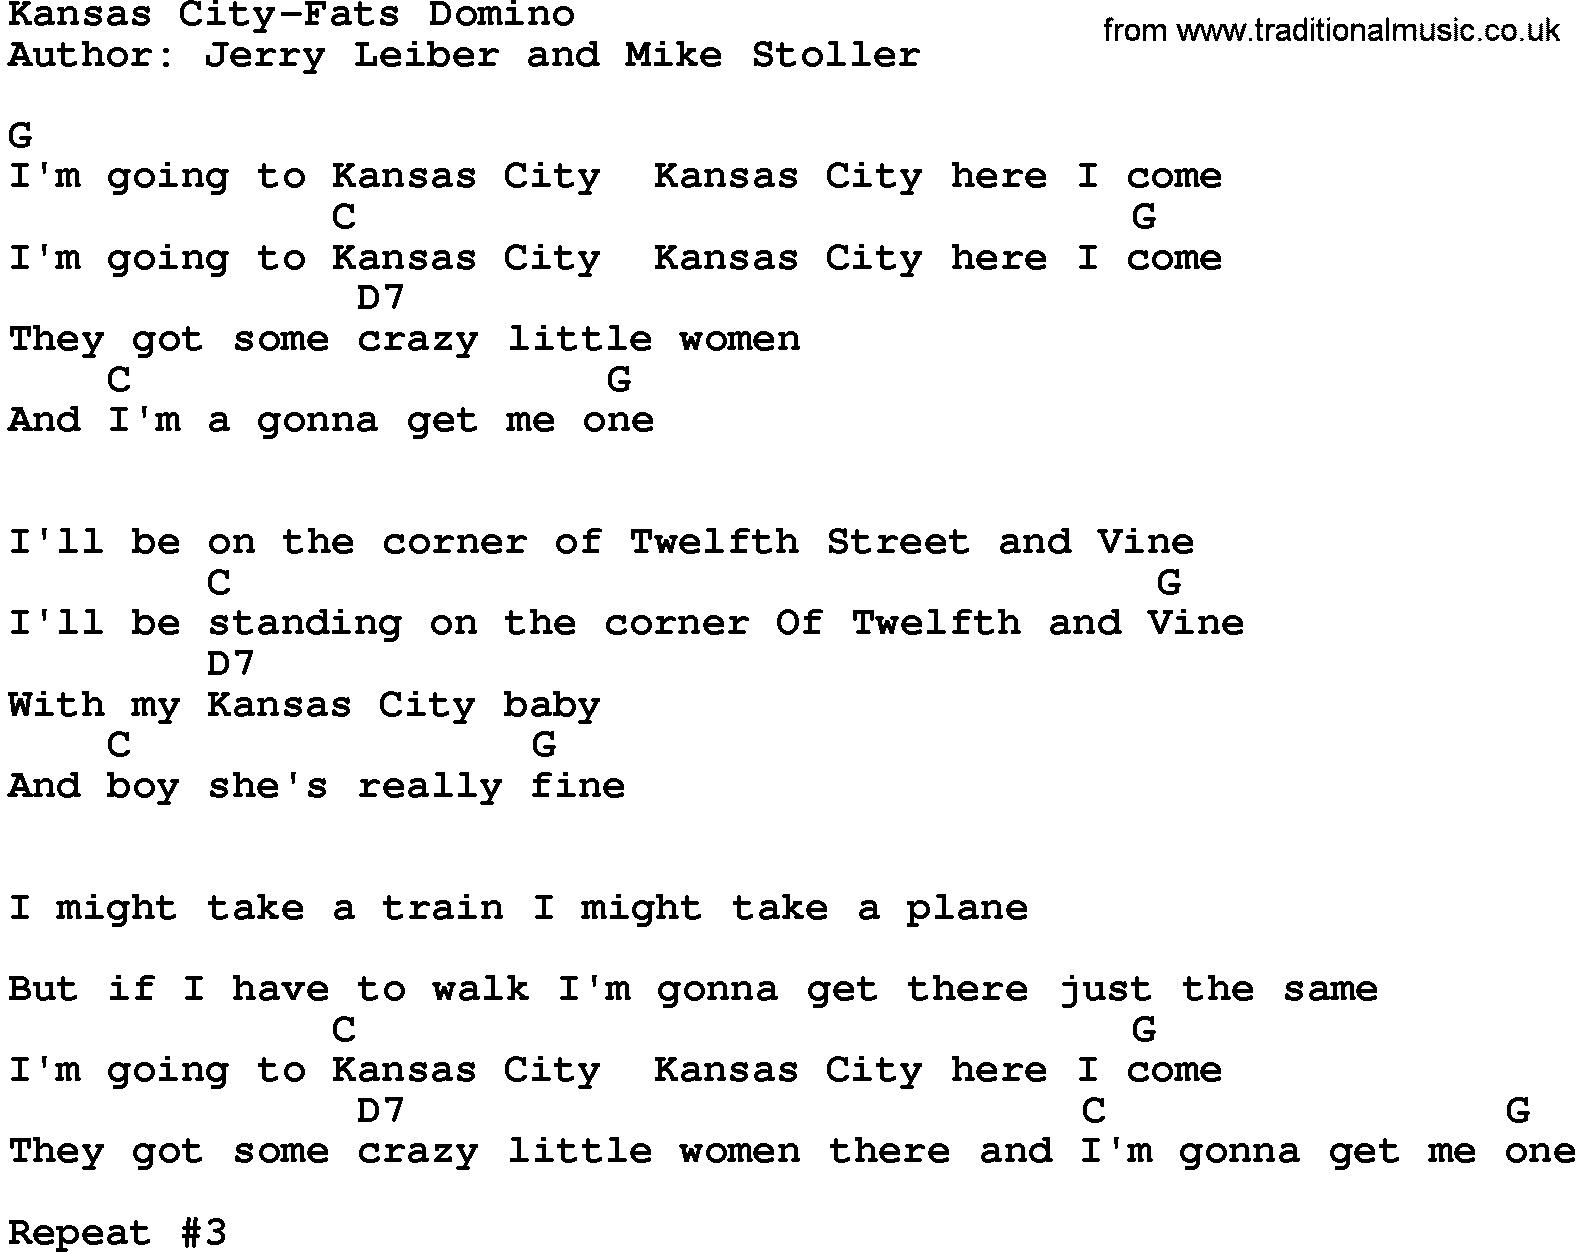 Country music song: Kansas City-Fats Domino lyrics and chords